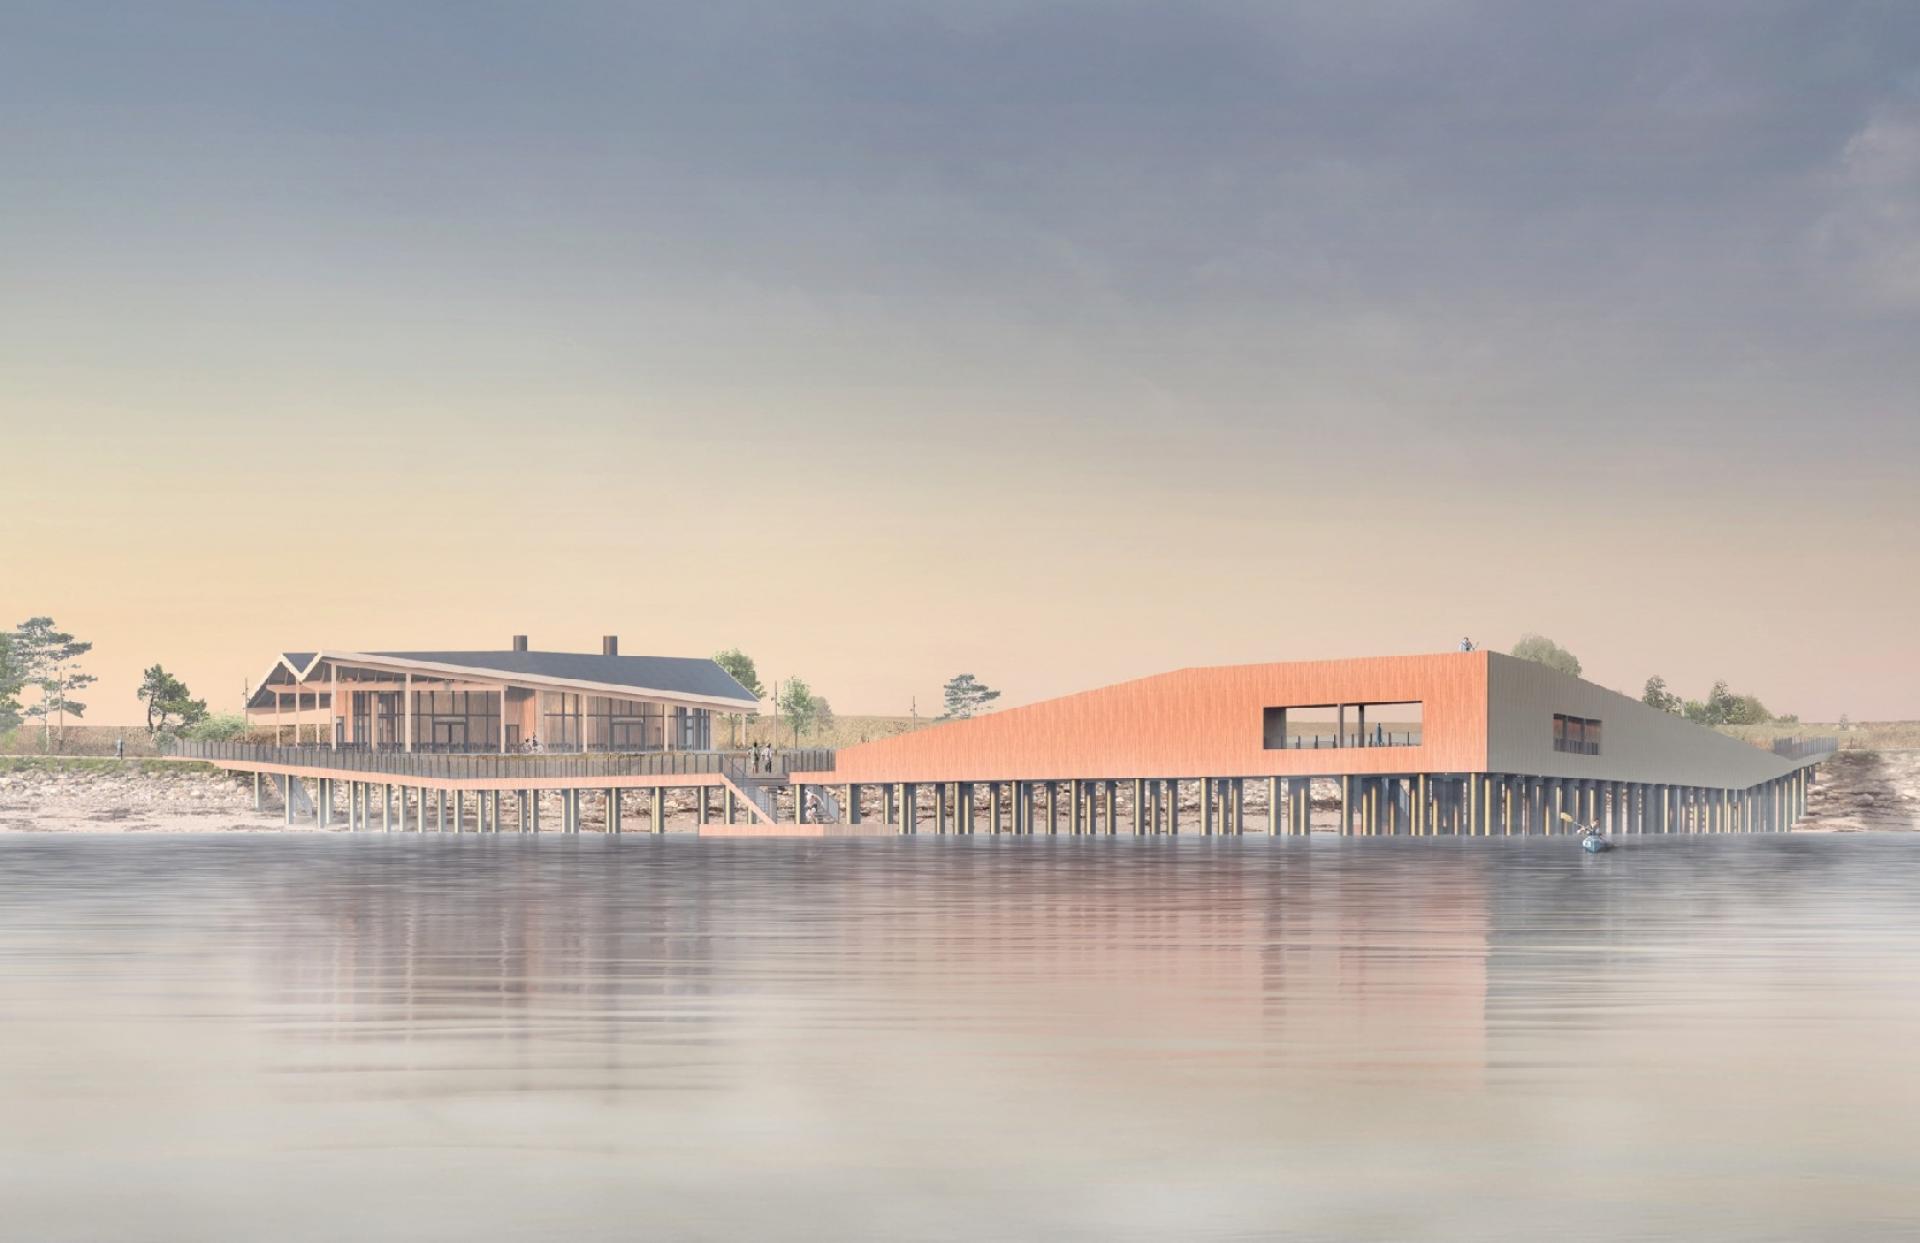 Foruden feriehuse indeholder Nordborg Resort en tropisk waterpark og et stort strandområde med promenade og havbad. Visualisering: Nordborg Resort Ejendomme.